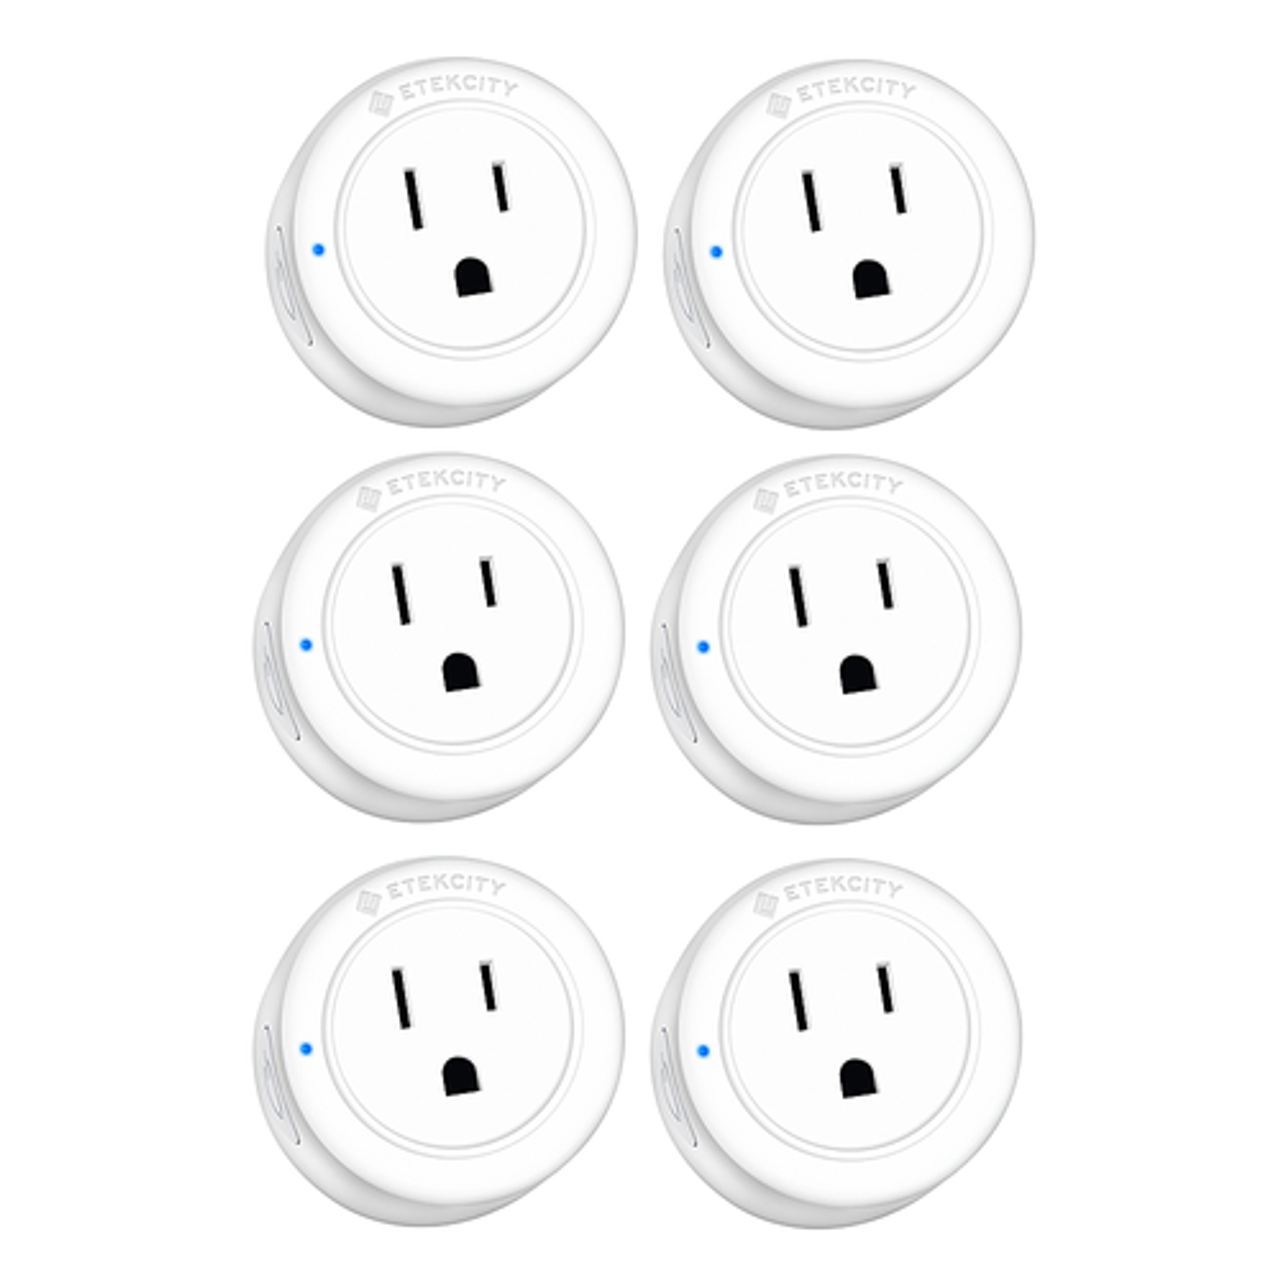 Etekcity Voltson Mini Smart WiFi Outlet Plug (10A) 6pk - White